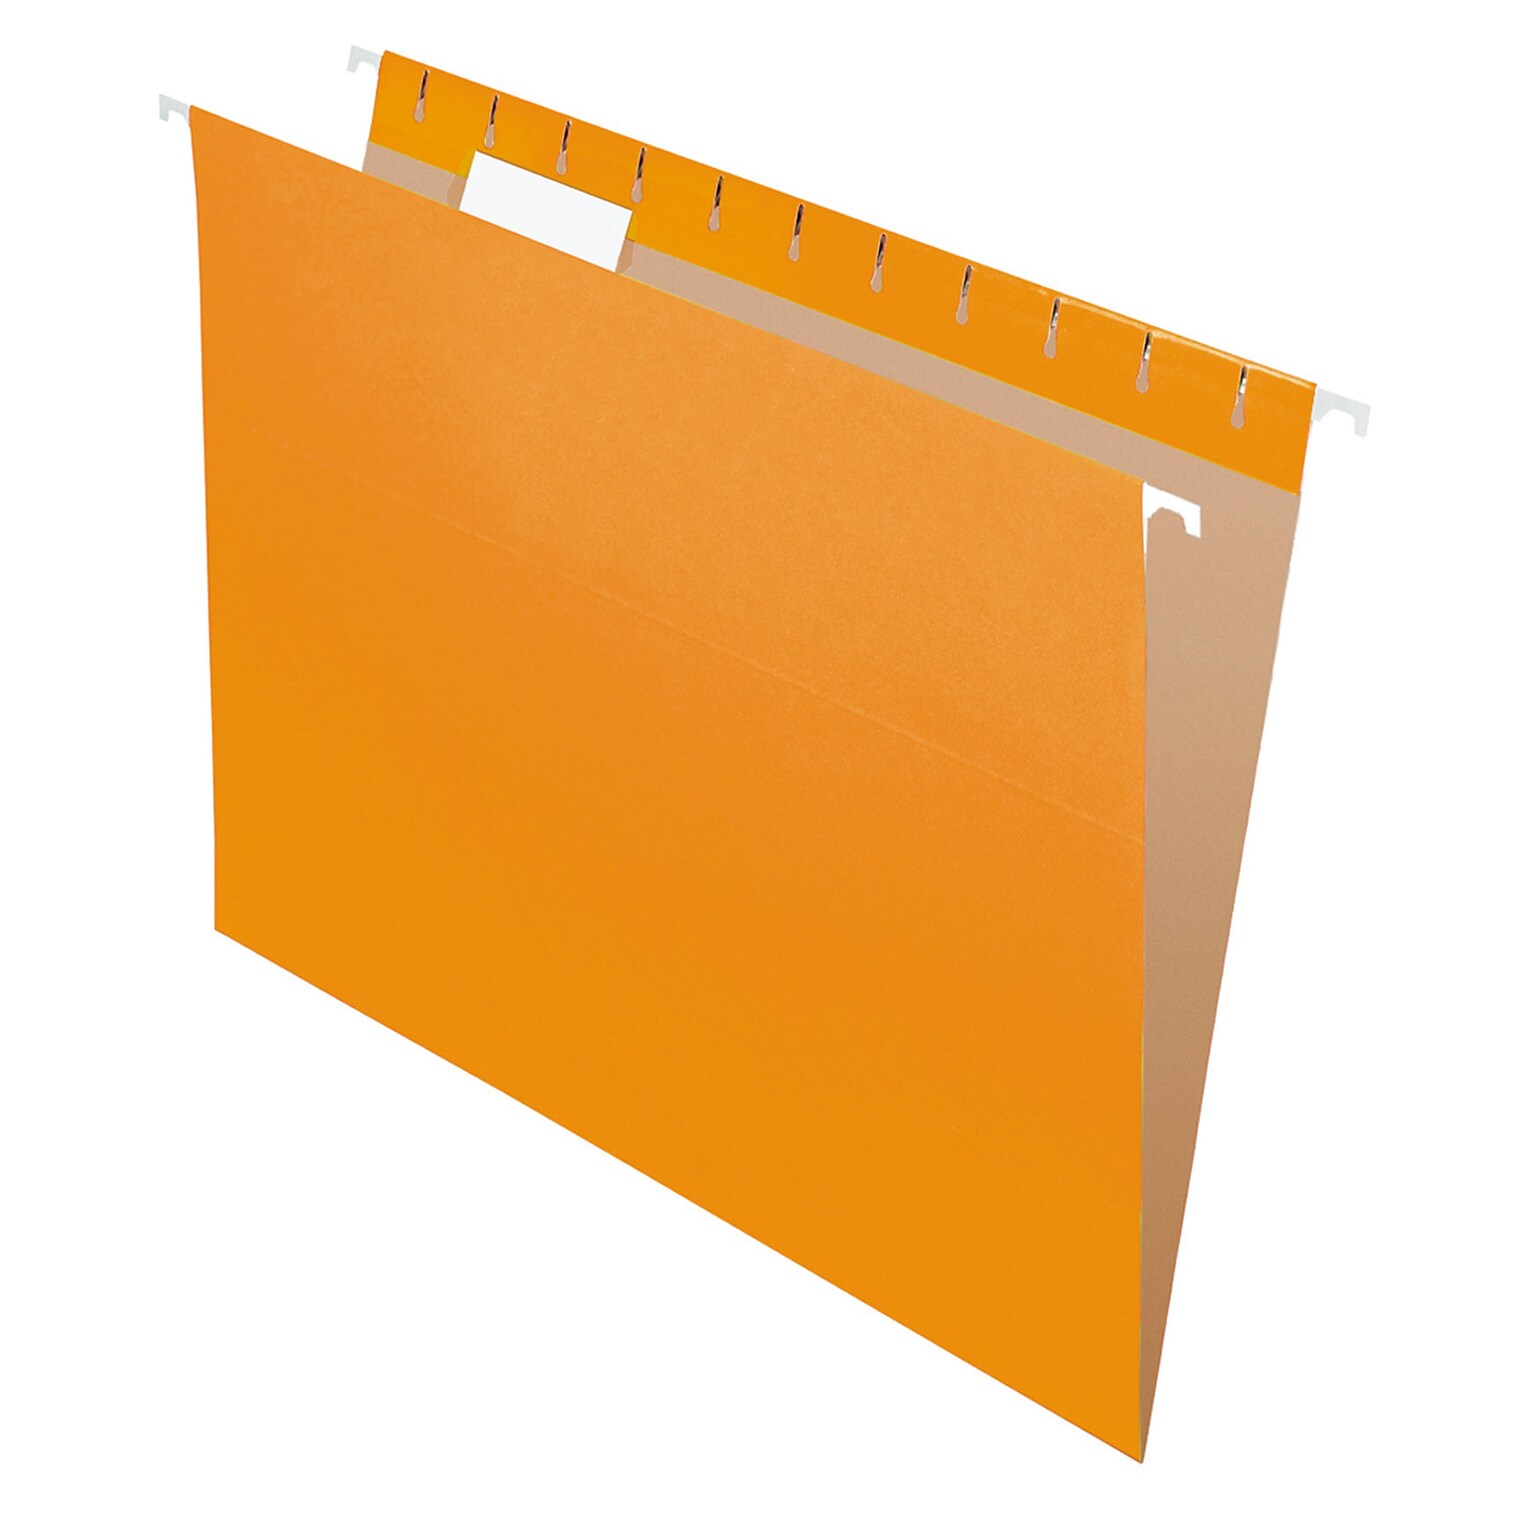 Pendaflex Recycled Hanging File Folders, 1/5 Tab, Letter Size, Orange, 25/Box (81607)